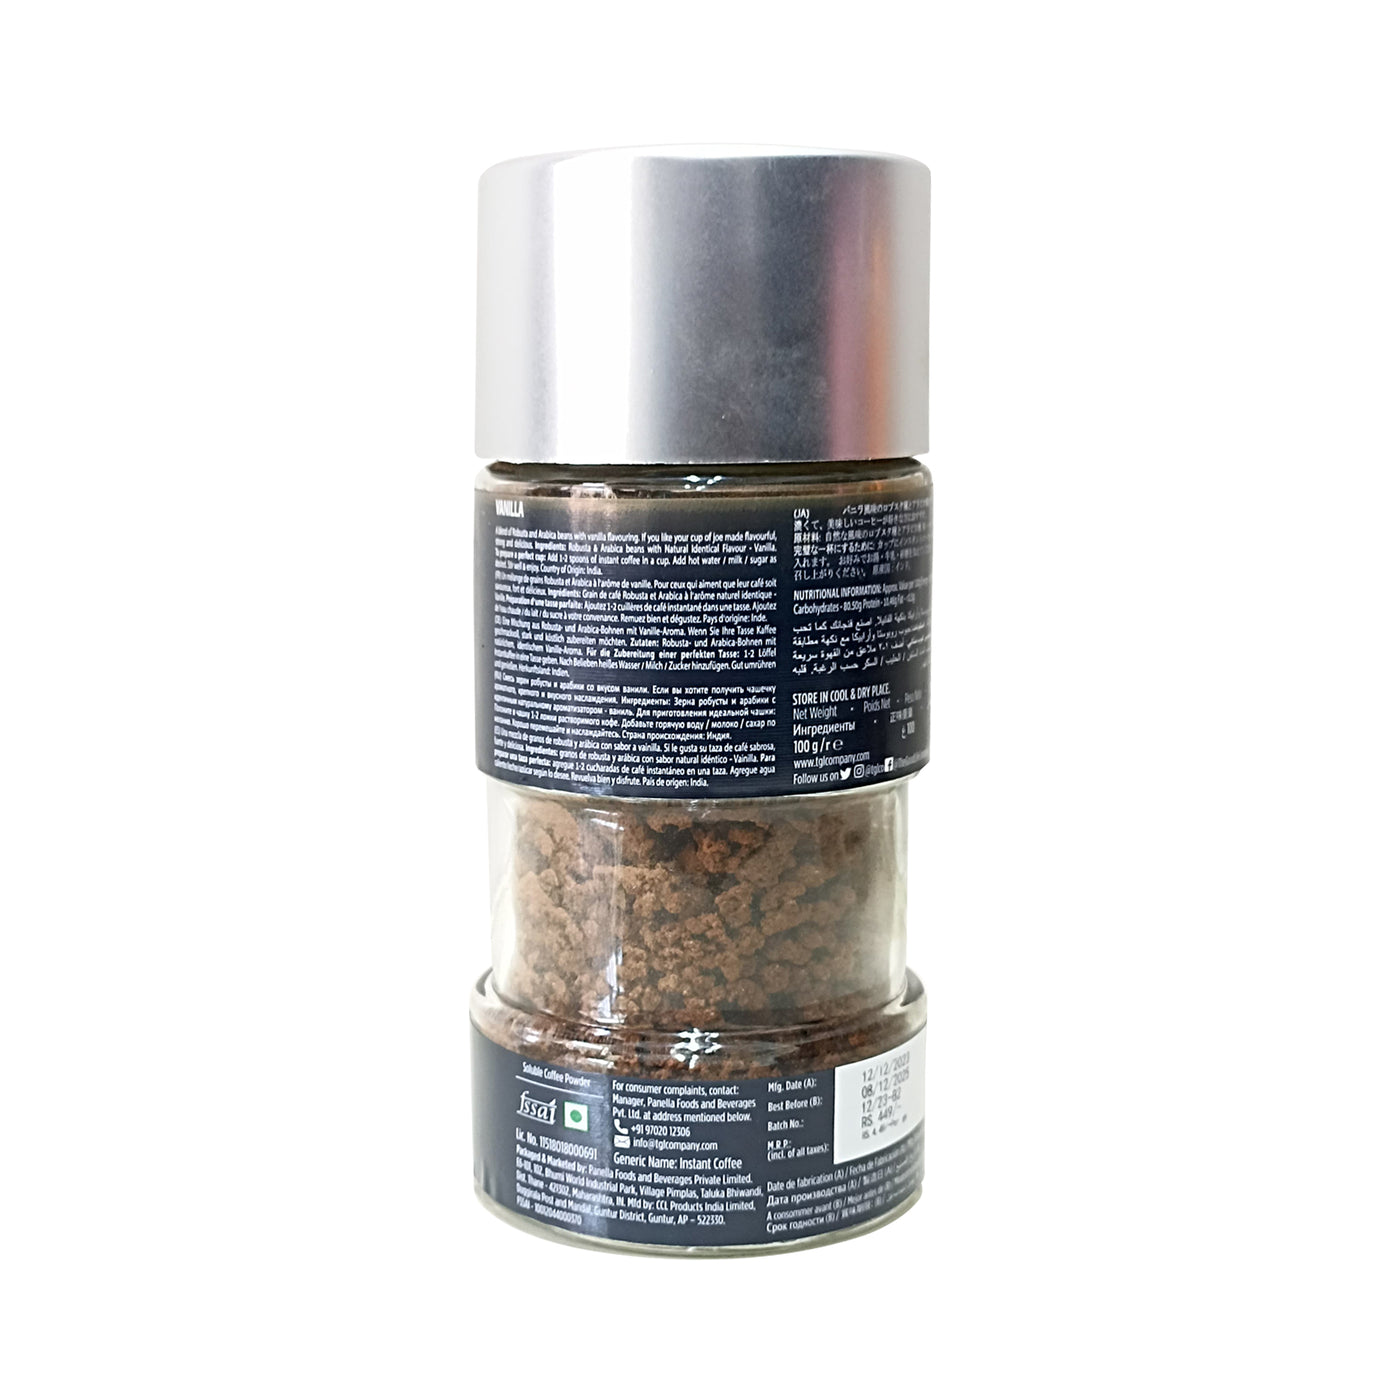 TGL Co. Vanilla Flavoured Instant Coffee + Caramel Flavored Instant Coffee (100 Grams Each)